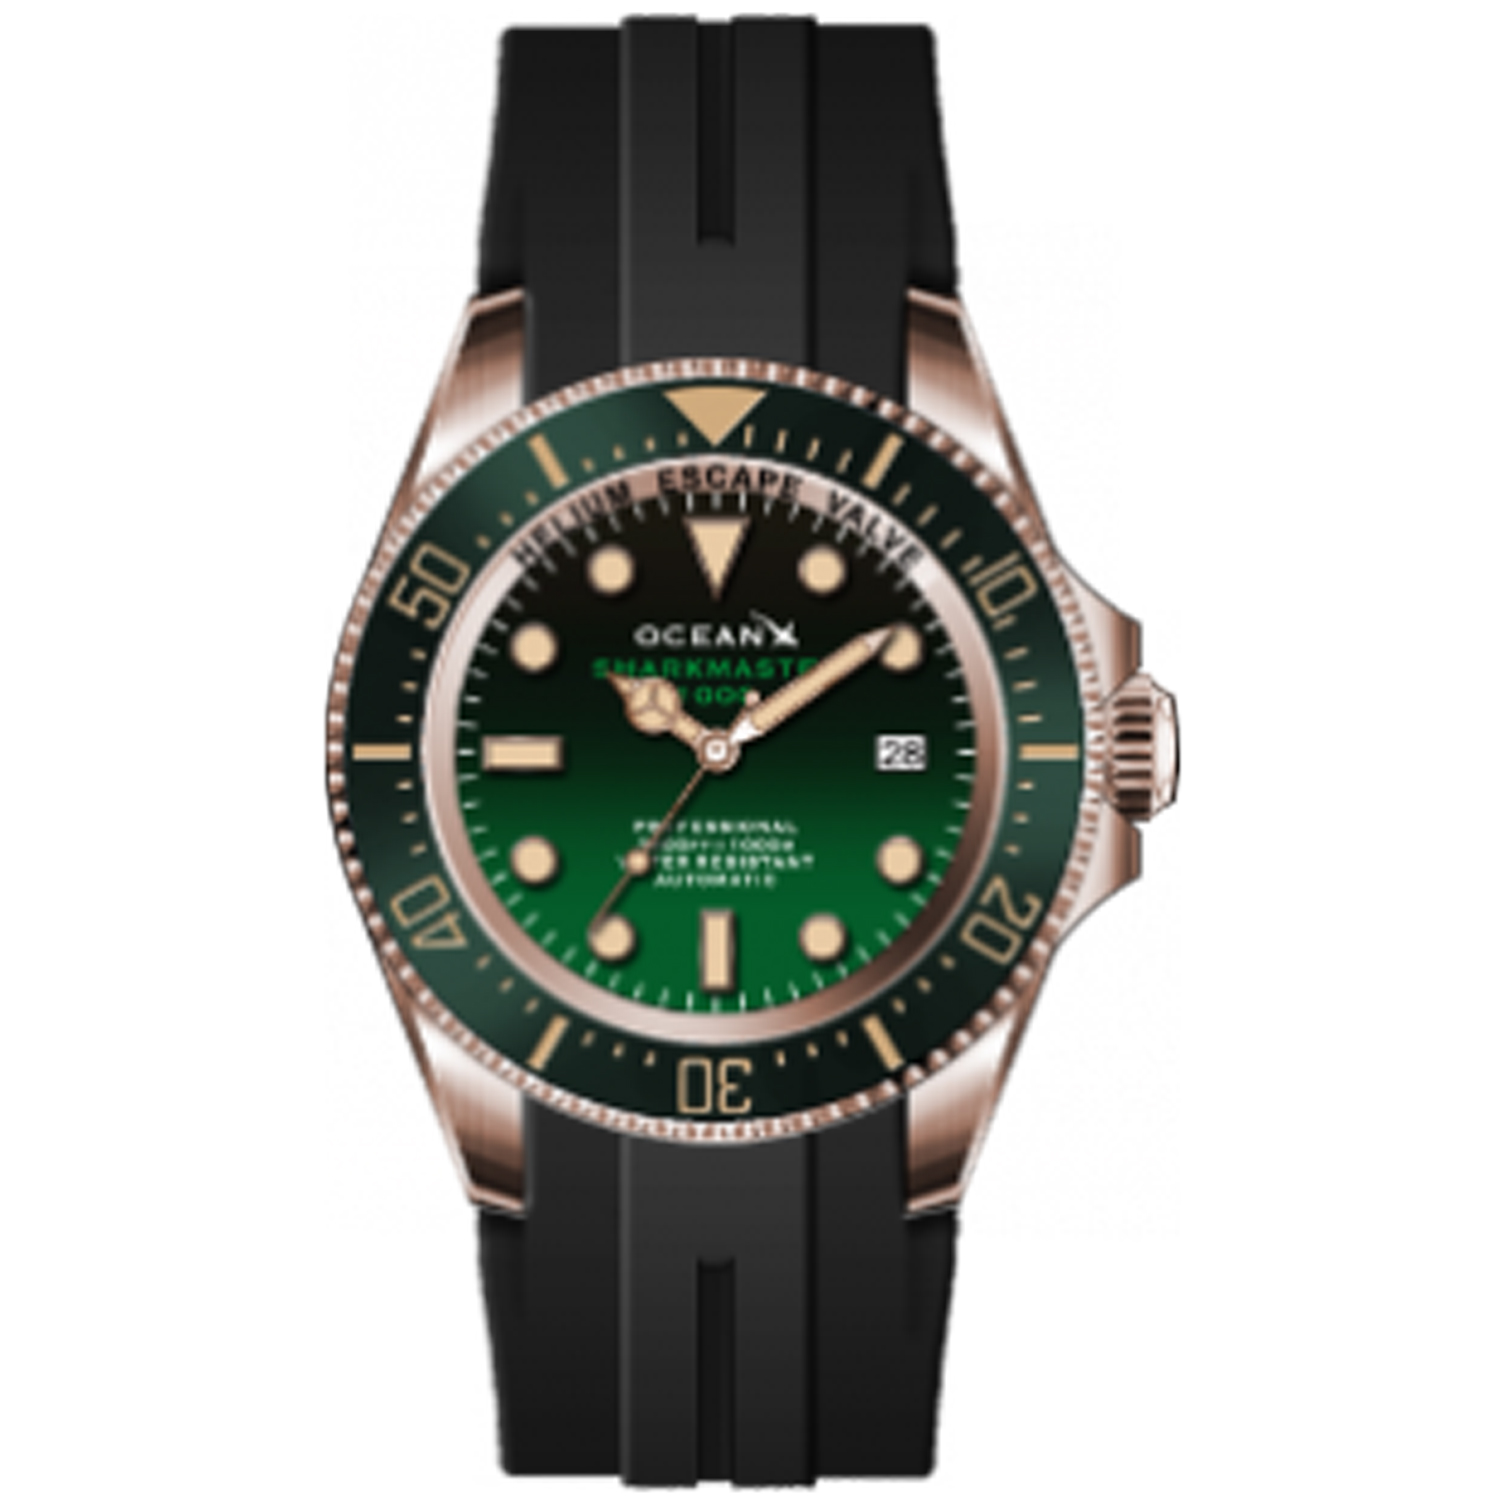 OceanX Sharkmaster 1000 Men's Diver Watch 44mm Black-Green Dial SMS1066